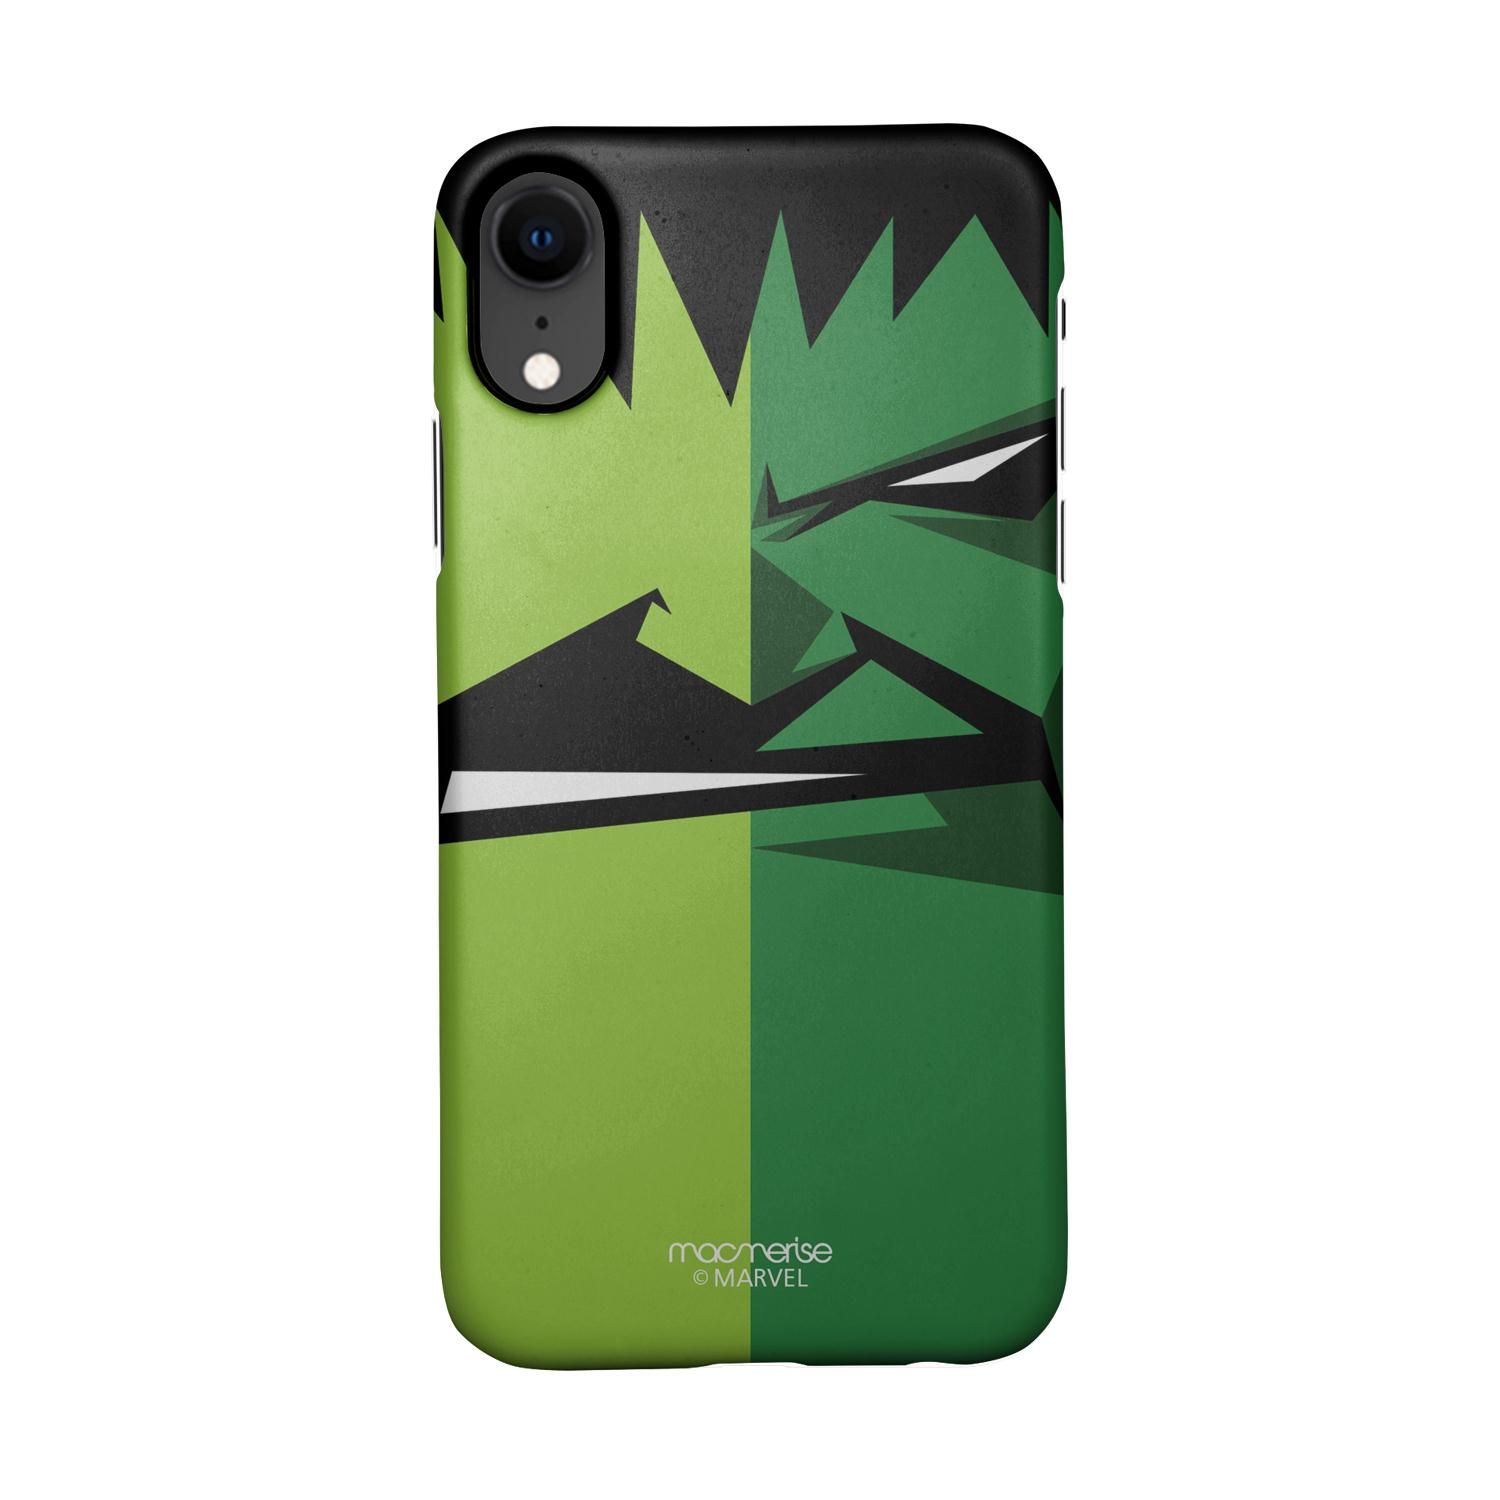 Buy Face Focus Hulk - Sleek Phone Case for iPhone XR Online